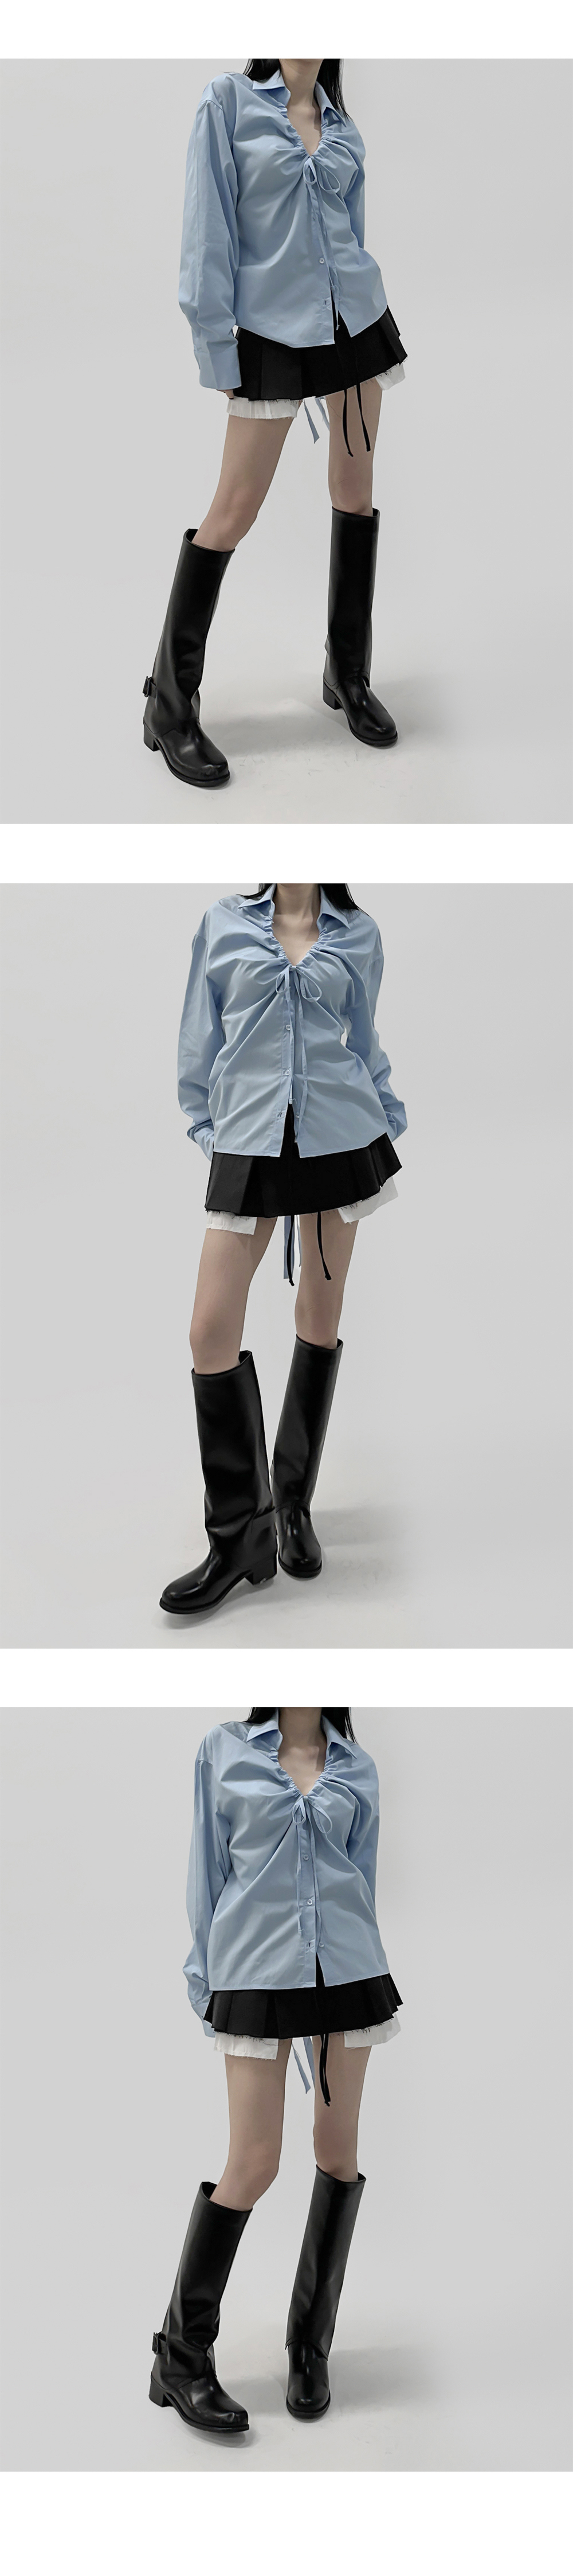 shorts model image-S1L3